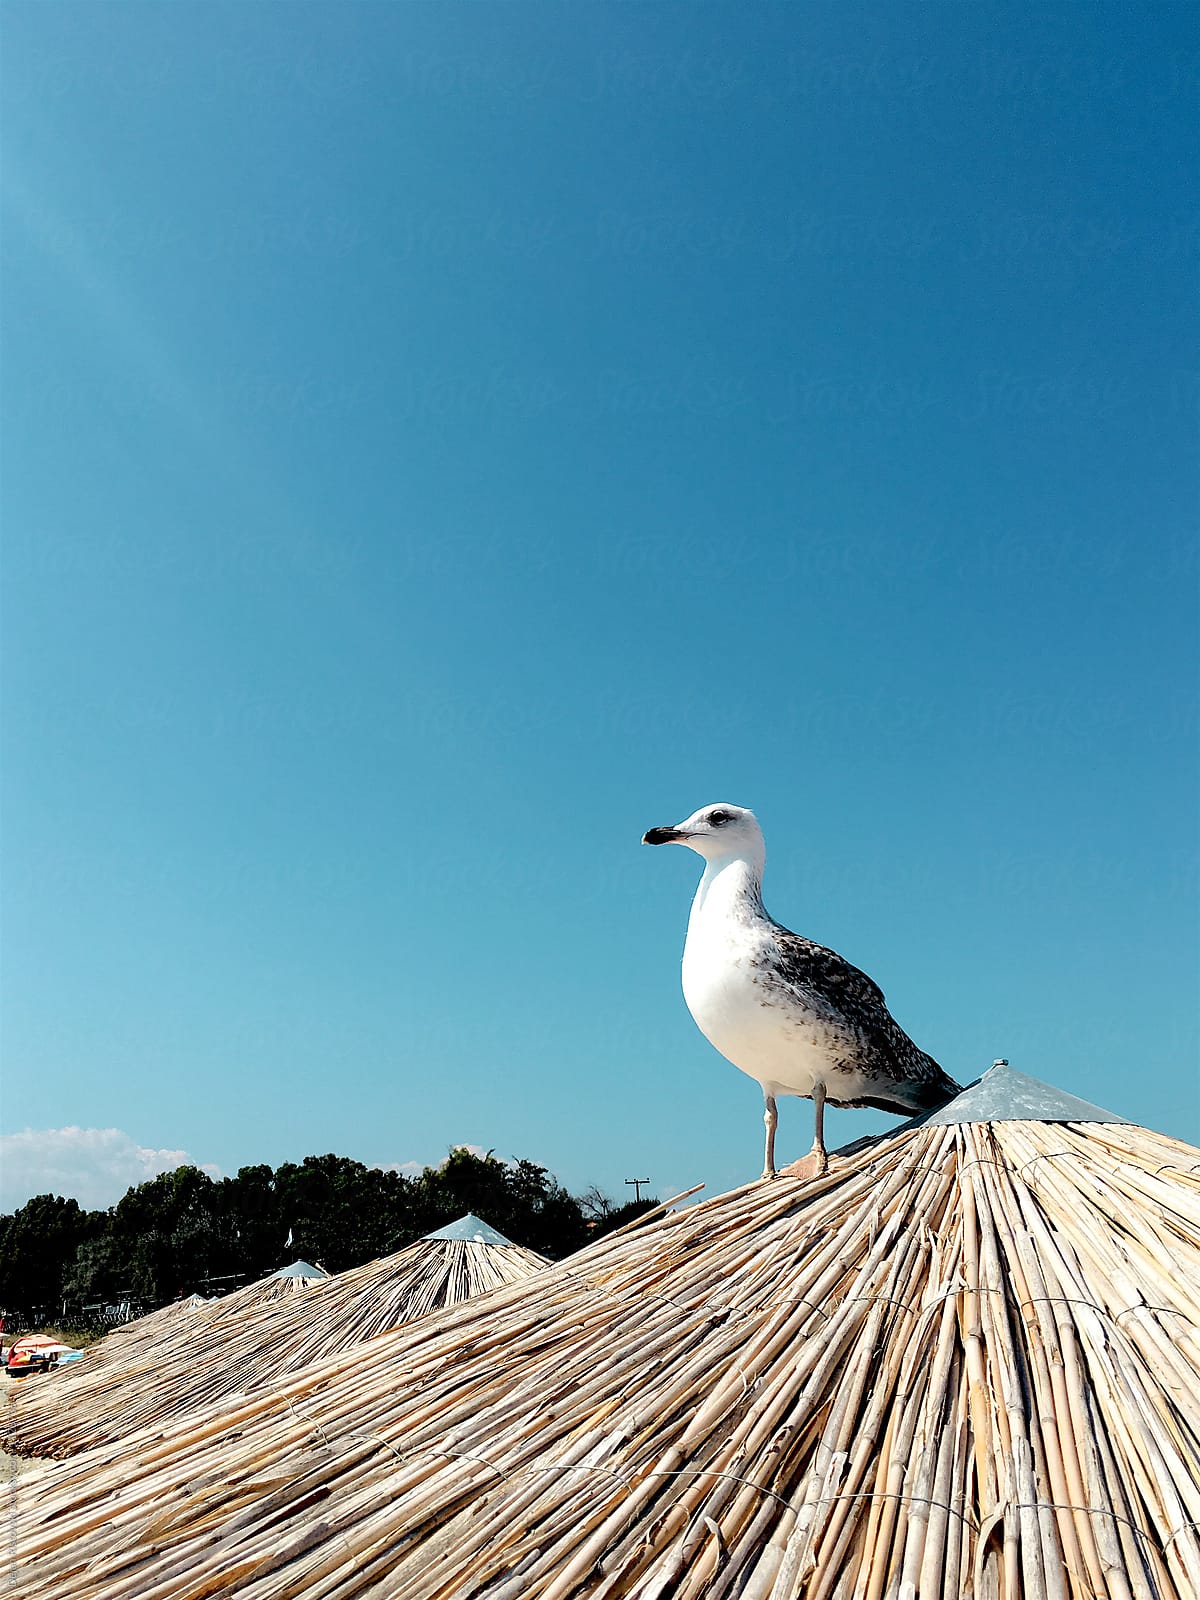 Seagull standing on umbrella on the beach.